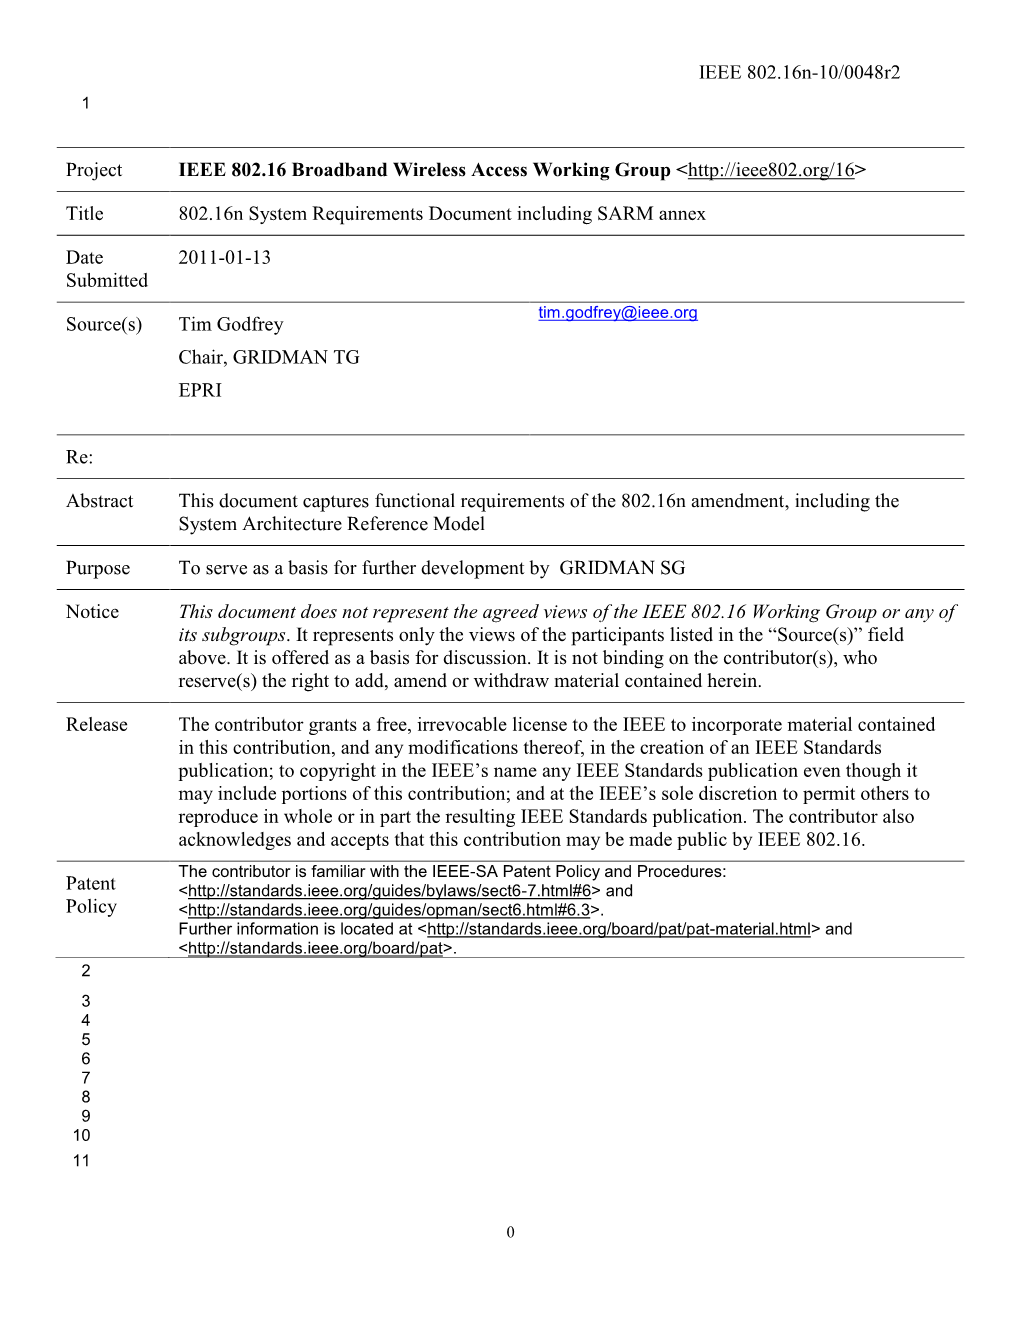 IEEE 802.16N-10/0048R2 Project IEEE 802.16 Broadband Wireless Access Working Group &lt; Title 802.16N S